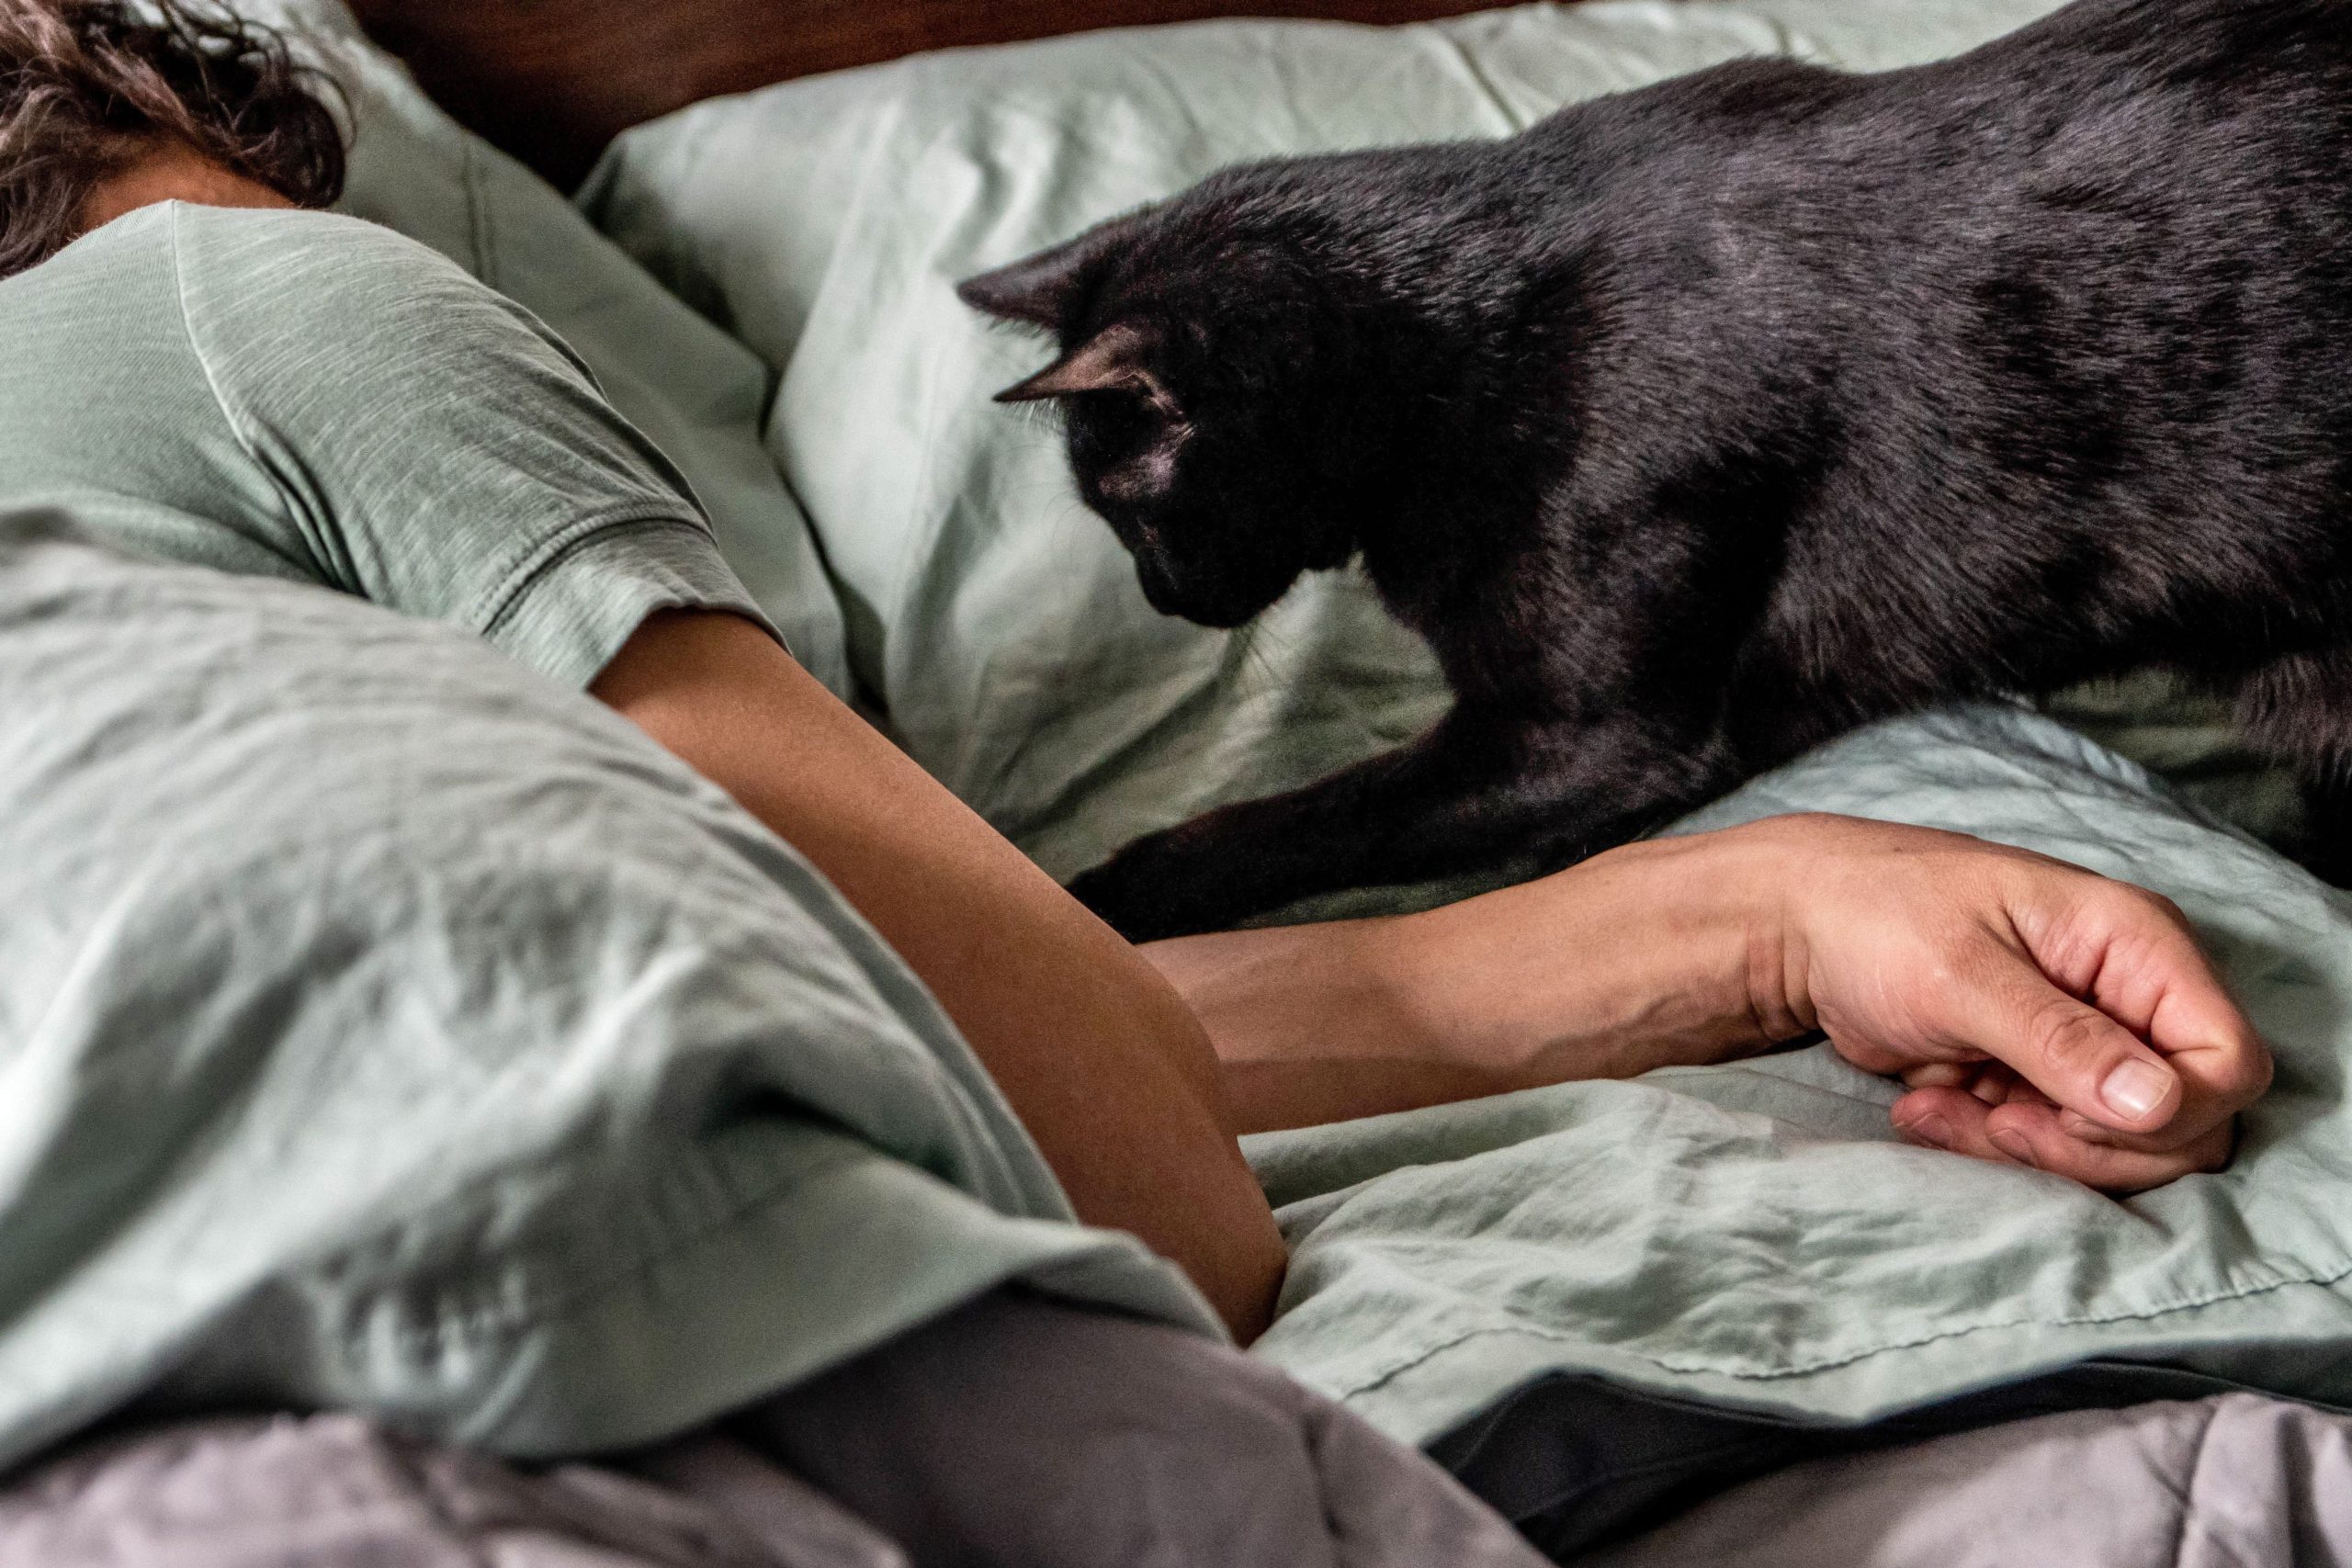 Cat lying on bed disturbing owner's sleep